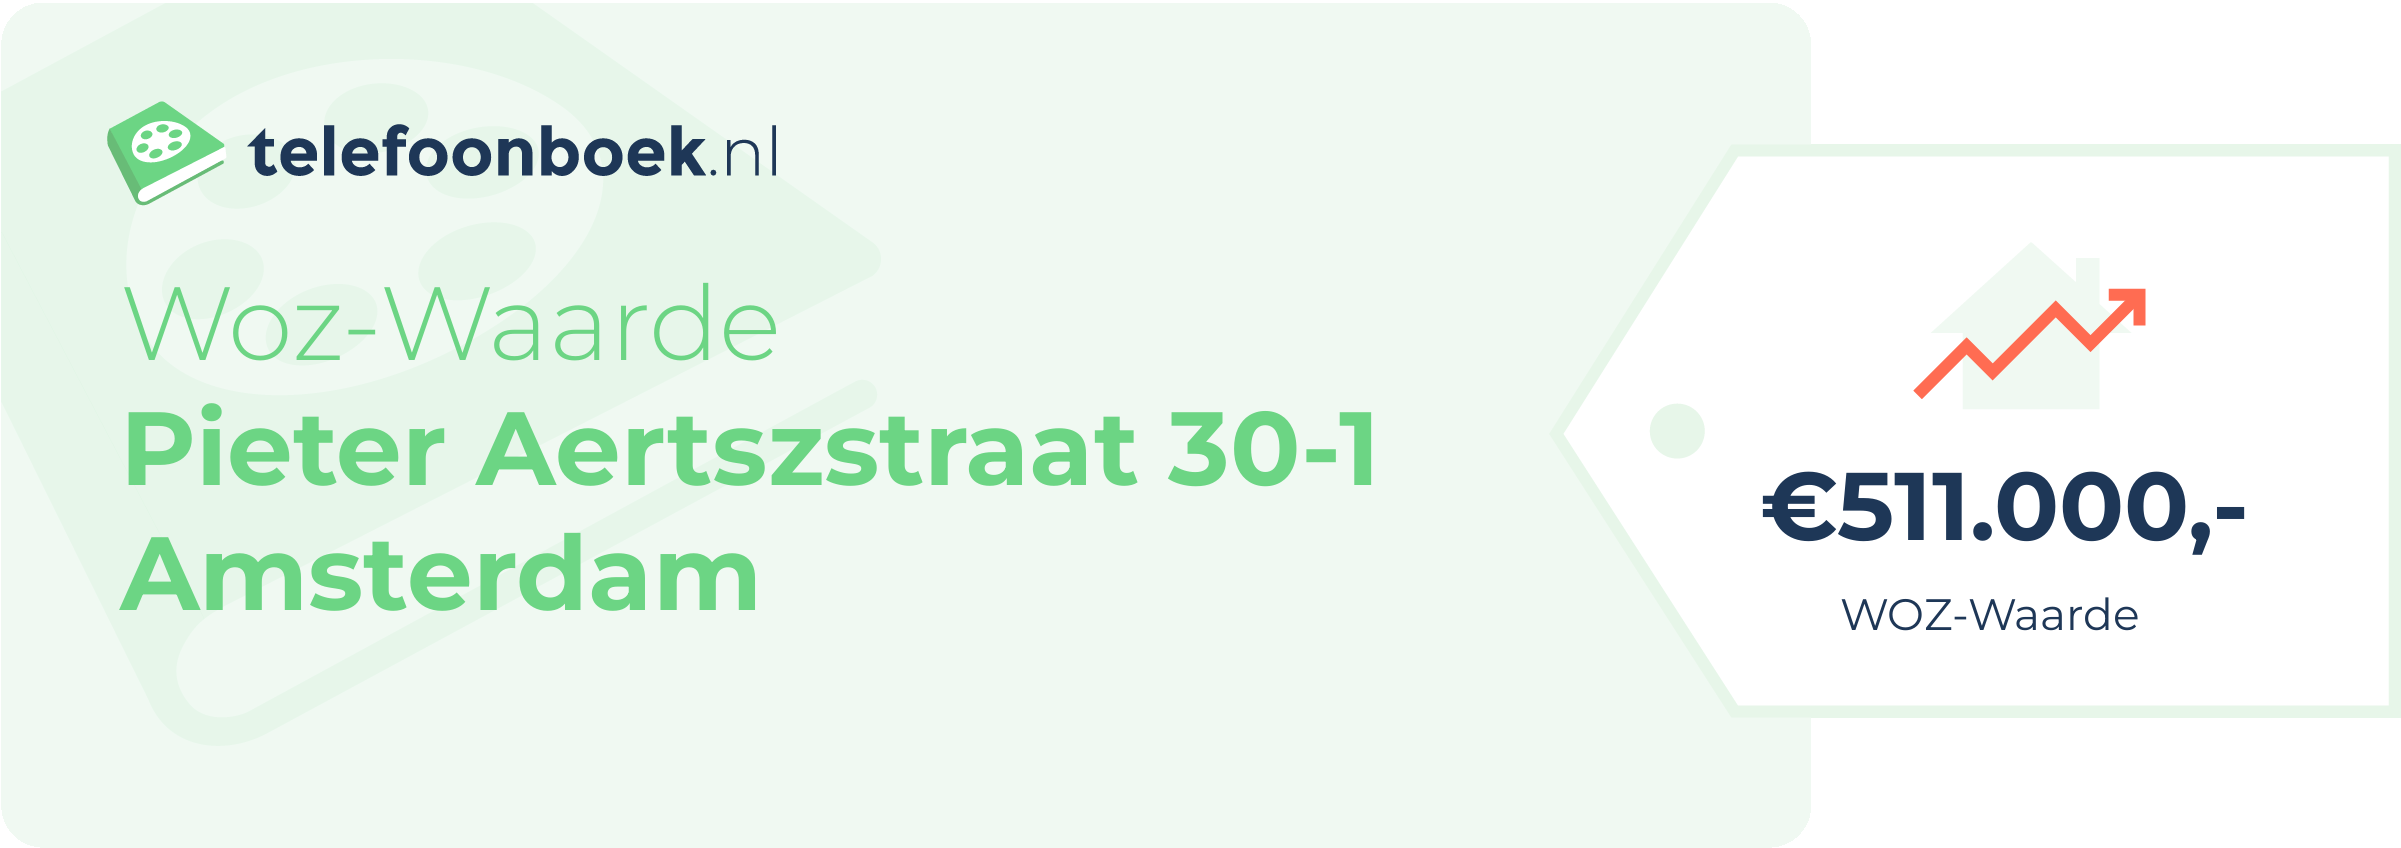 WOZ-waarde Pieter Aertszstraat 30-1 Amsterdam